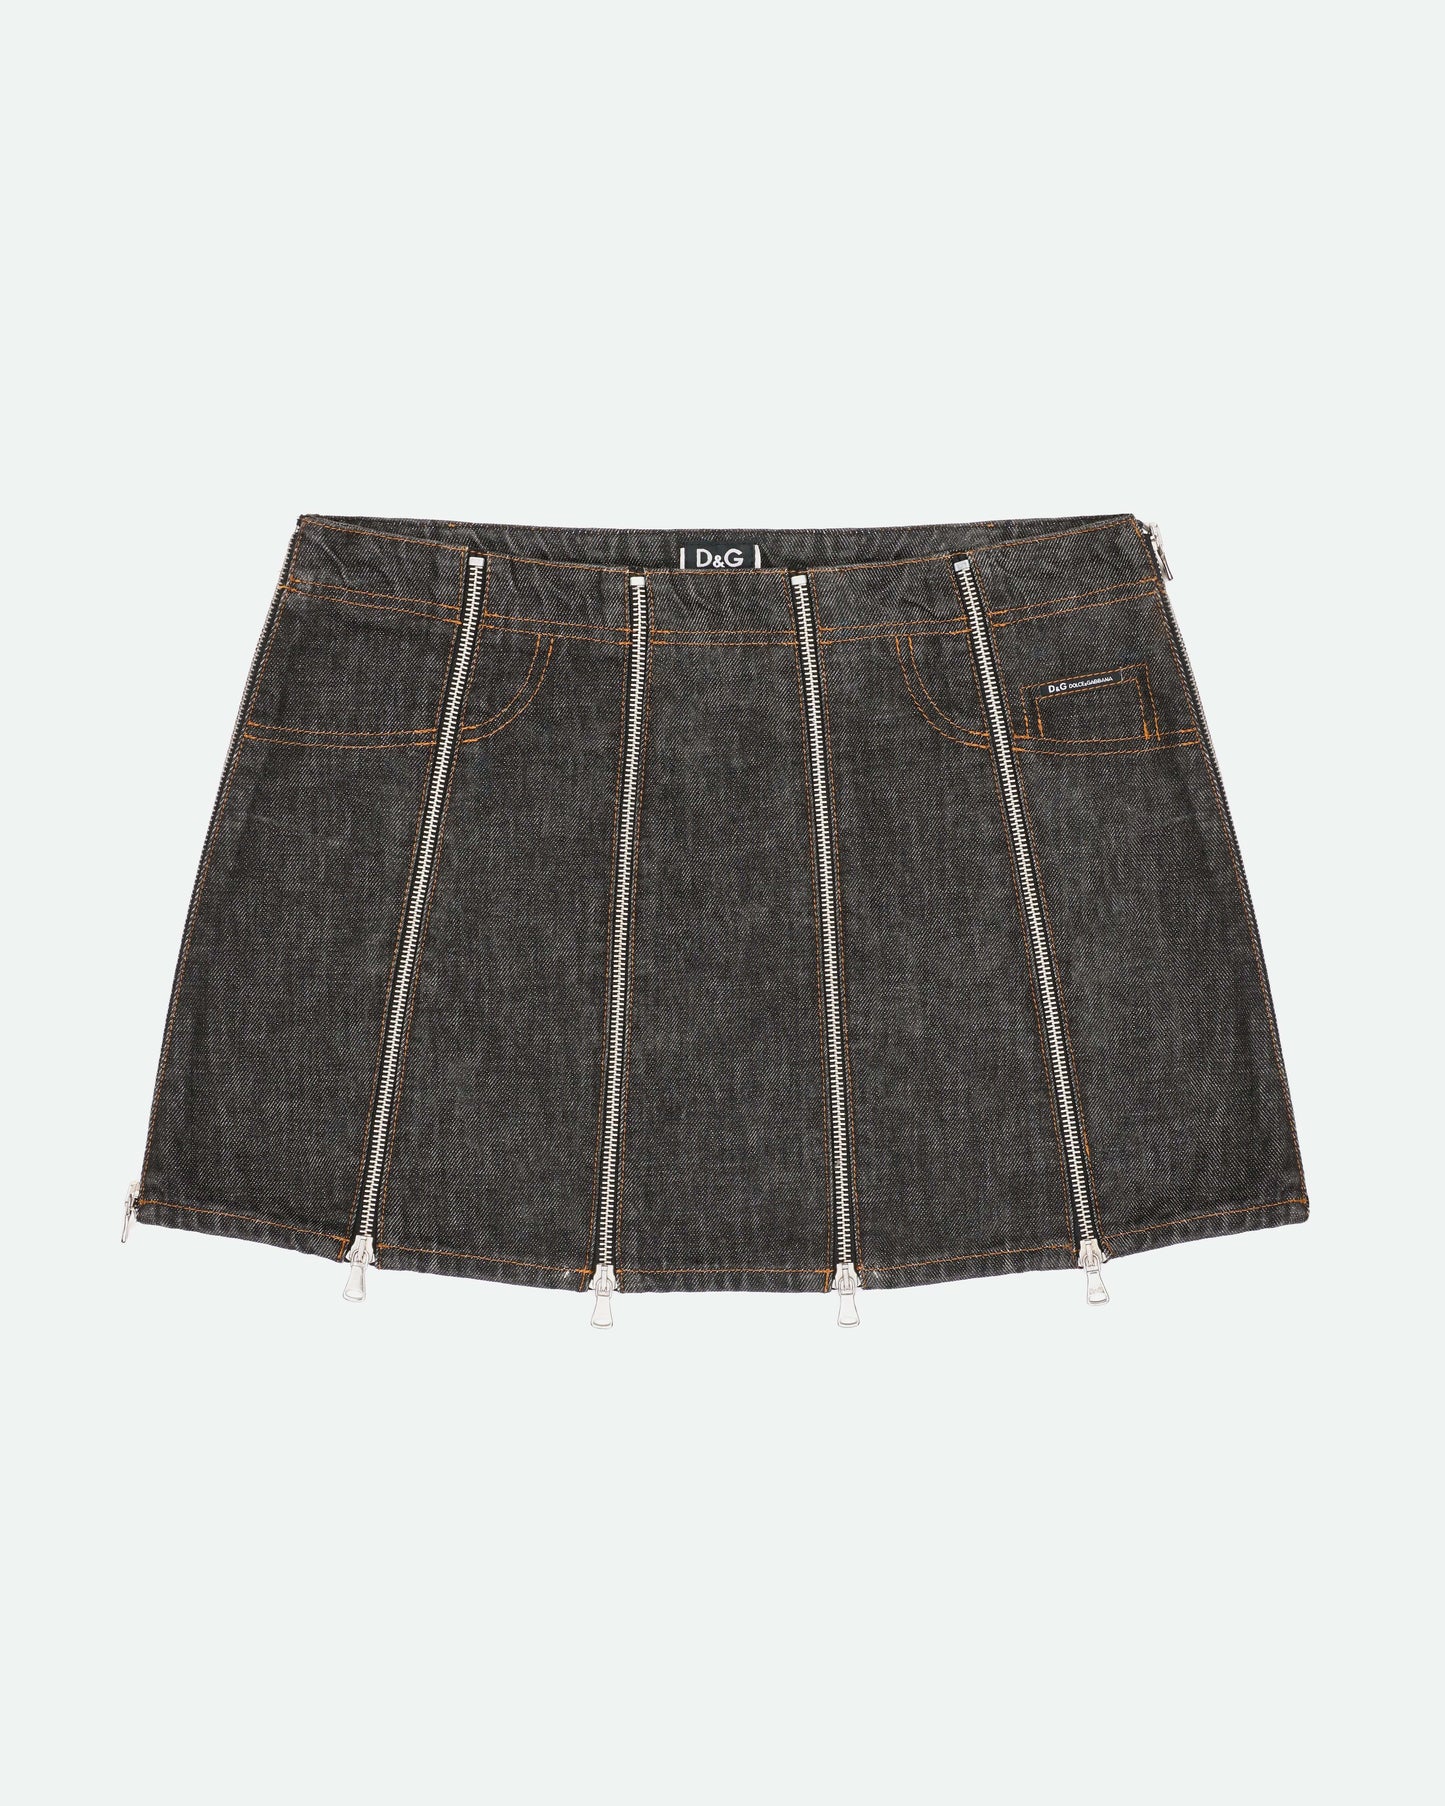 Dolce & Gabbana SS04 Multi-Zipper Denim Skirt